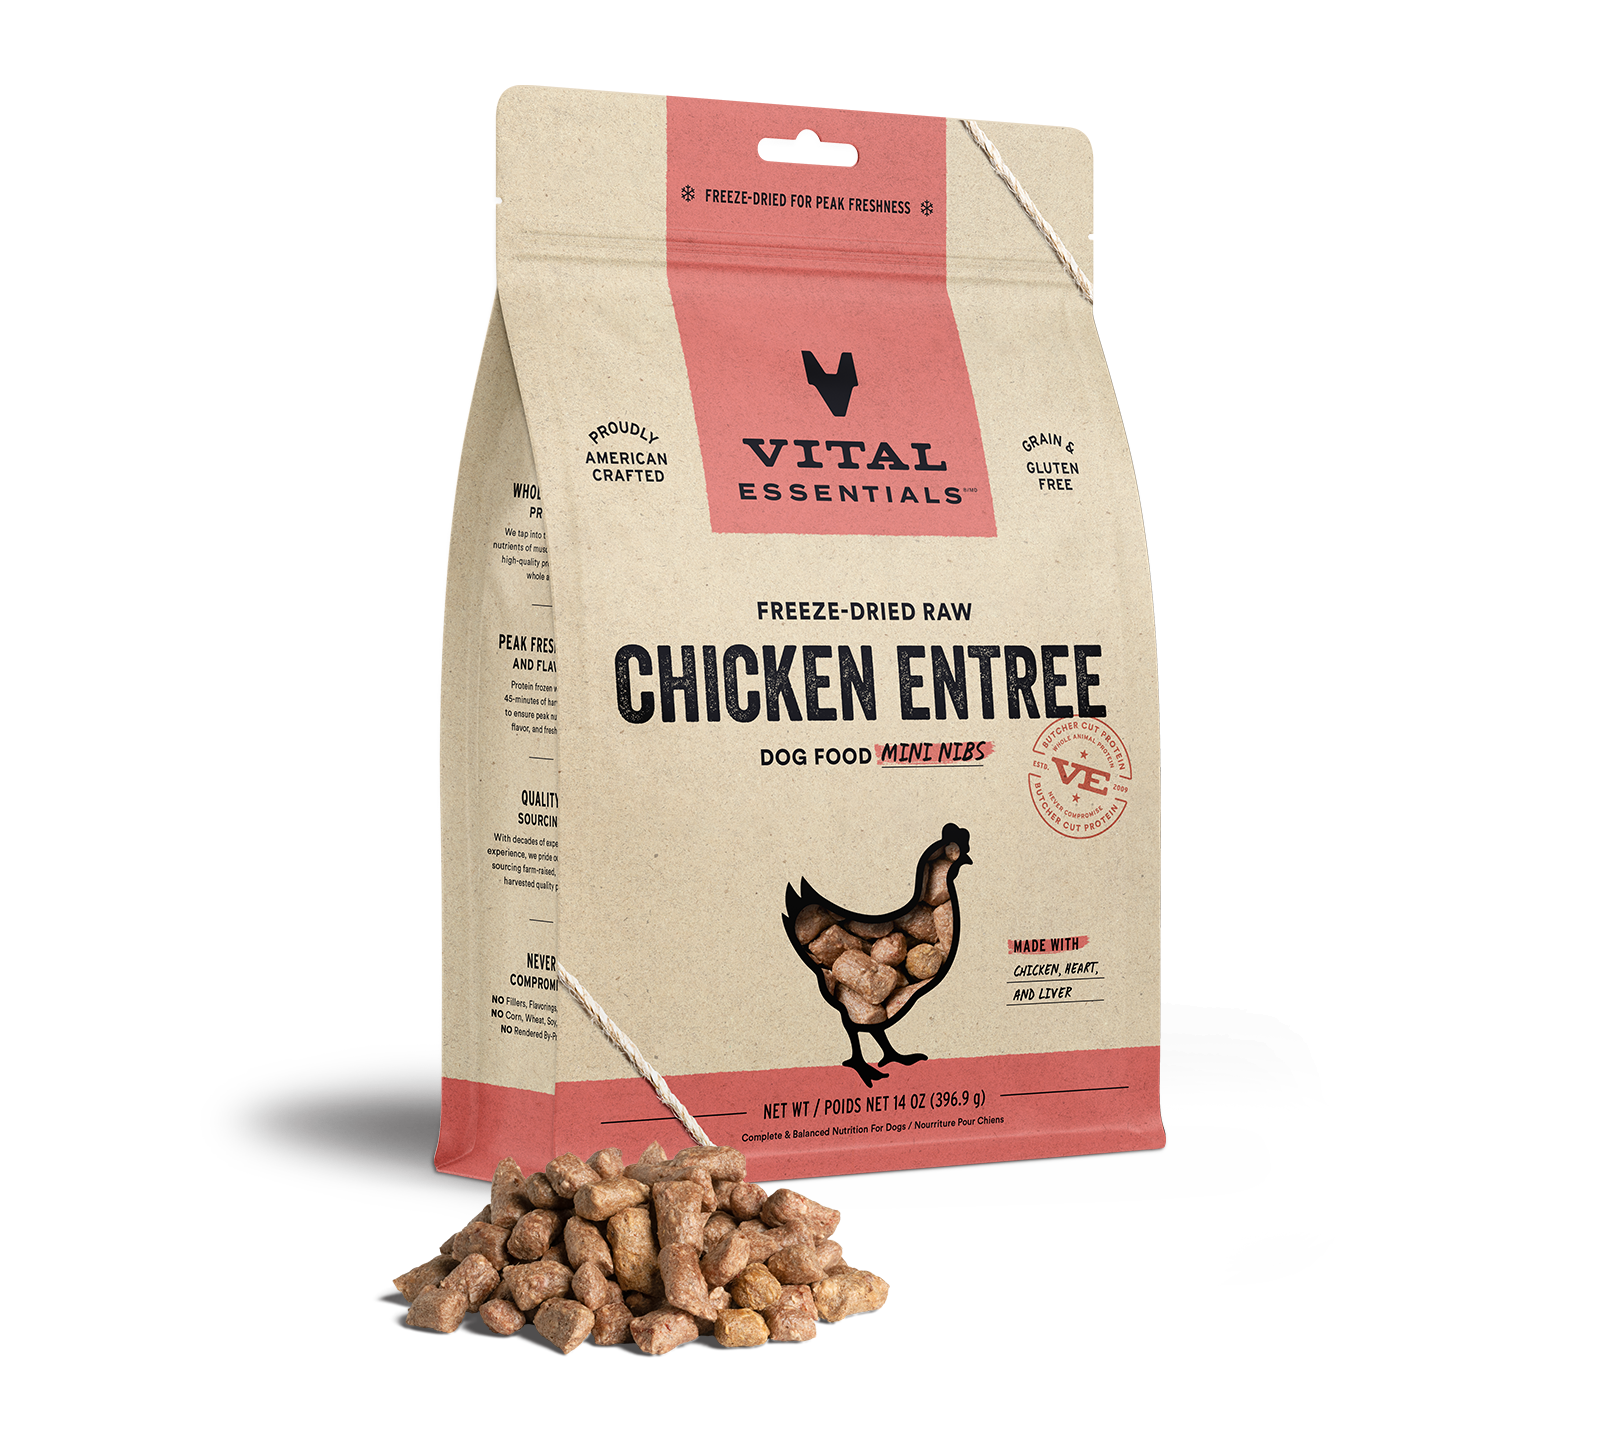 Vital Essentials Freeze-Dried Raw Chicken Entree Dog Food Mini Nibs, 14 oz - Items on Sale Now